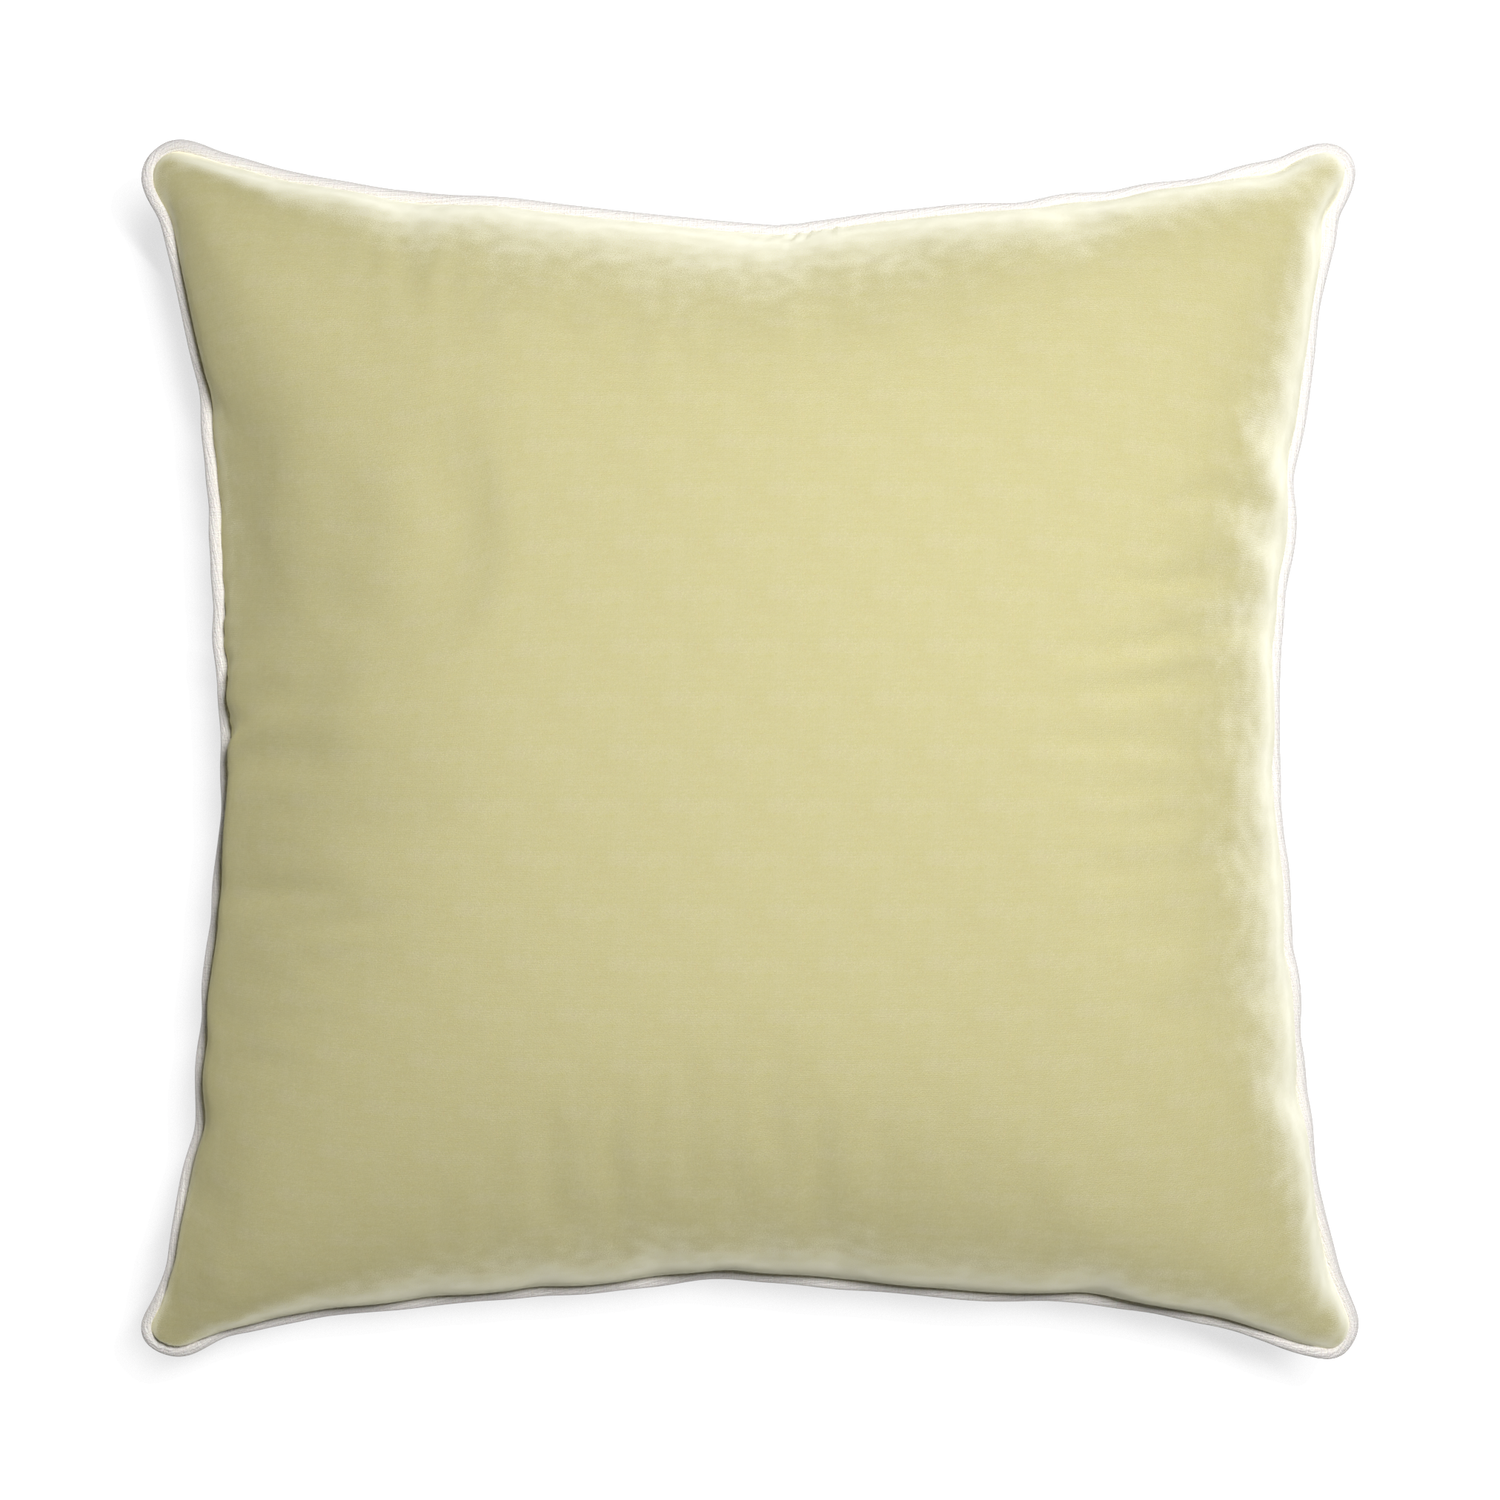 Euro-sham pear velvet custom pillow with snow piping on white background